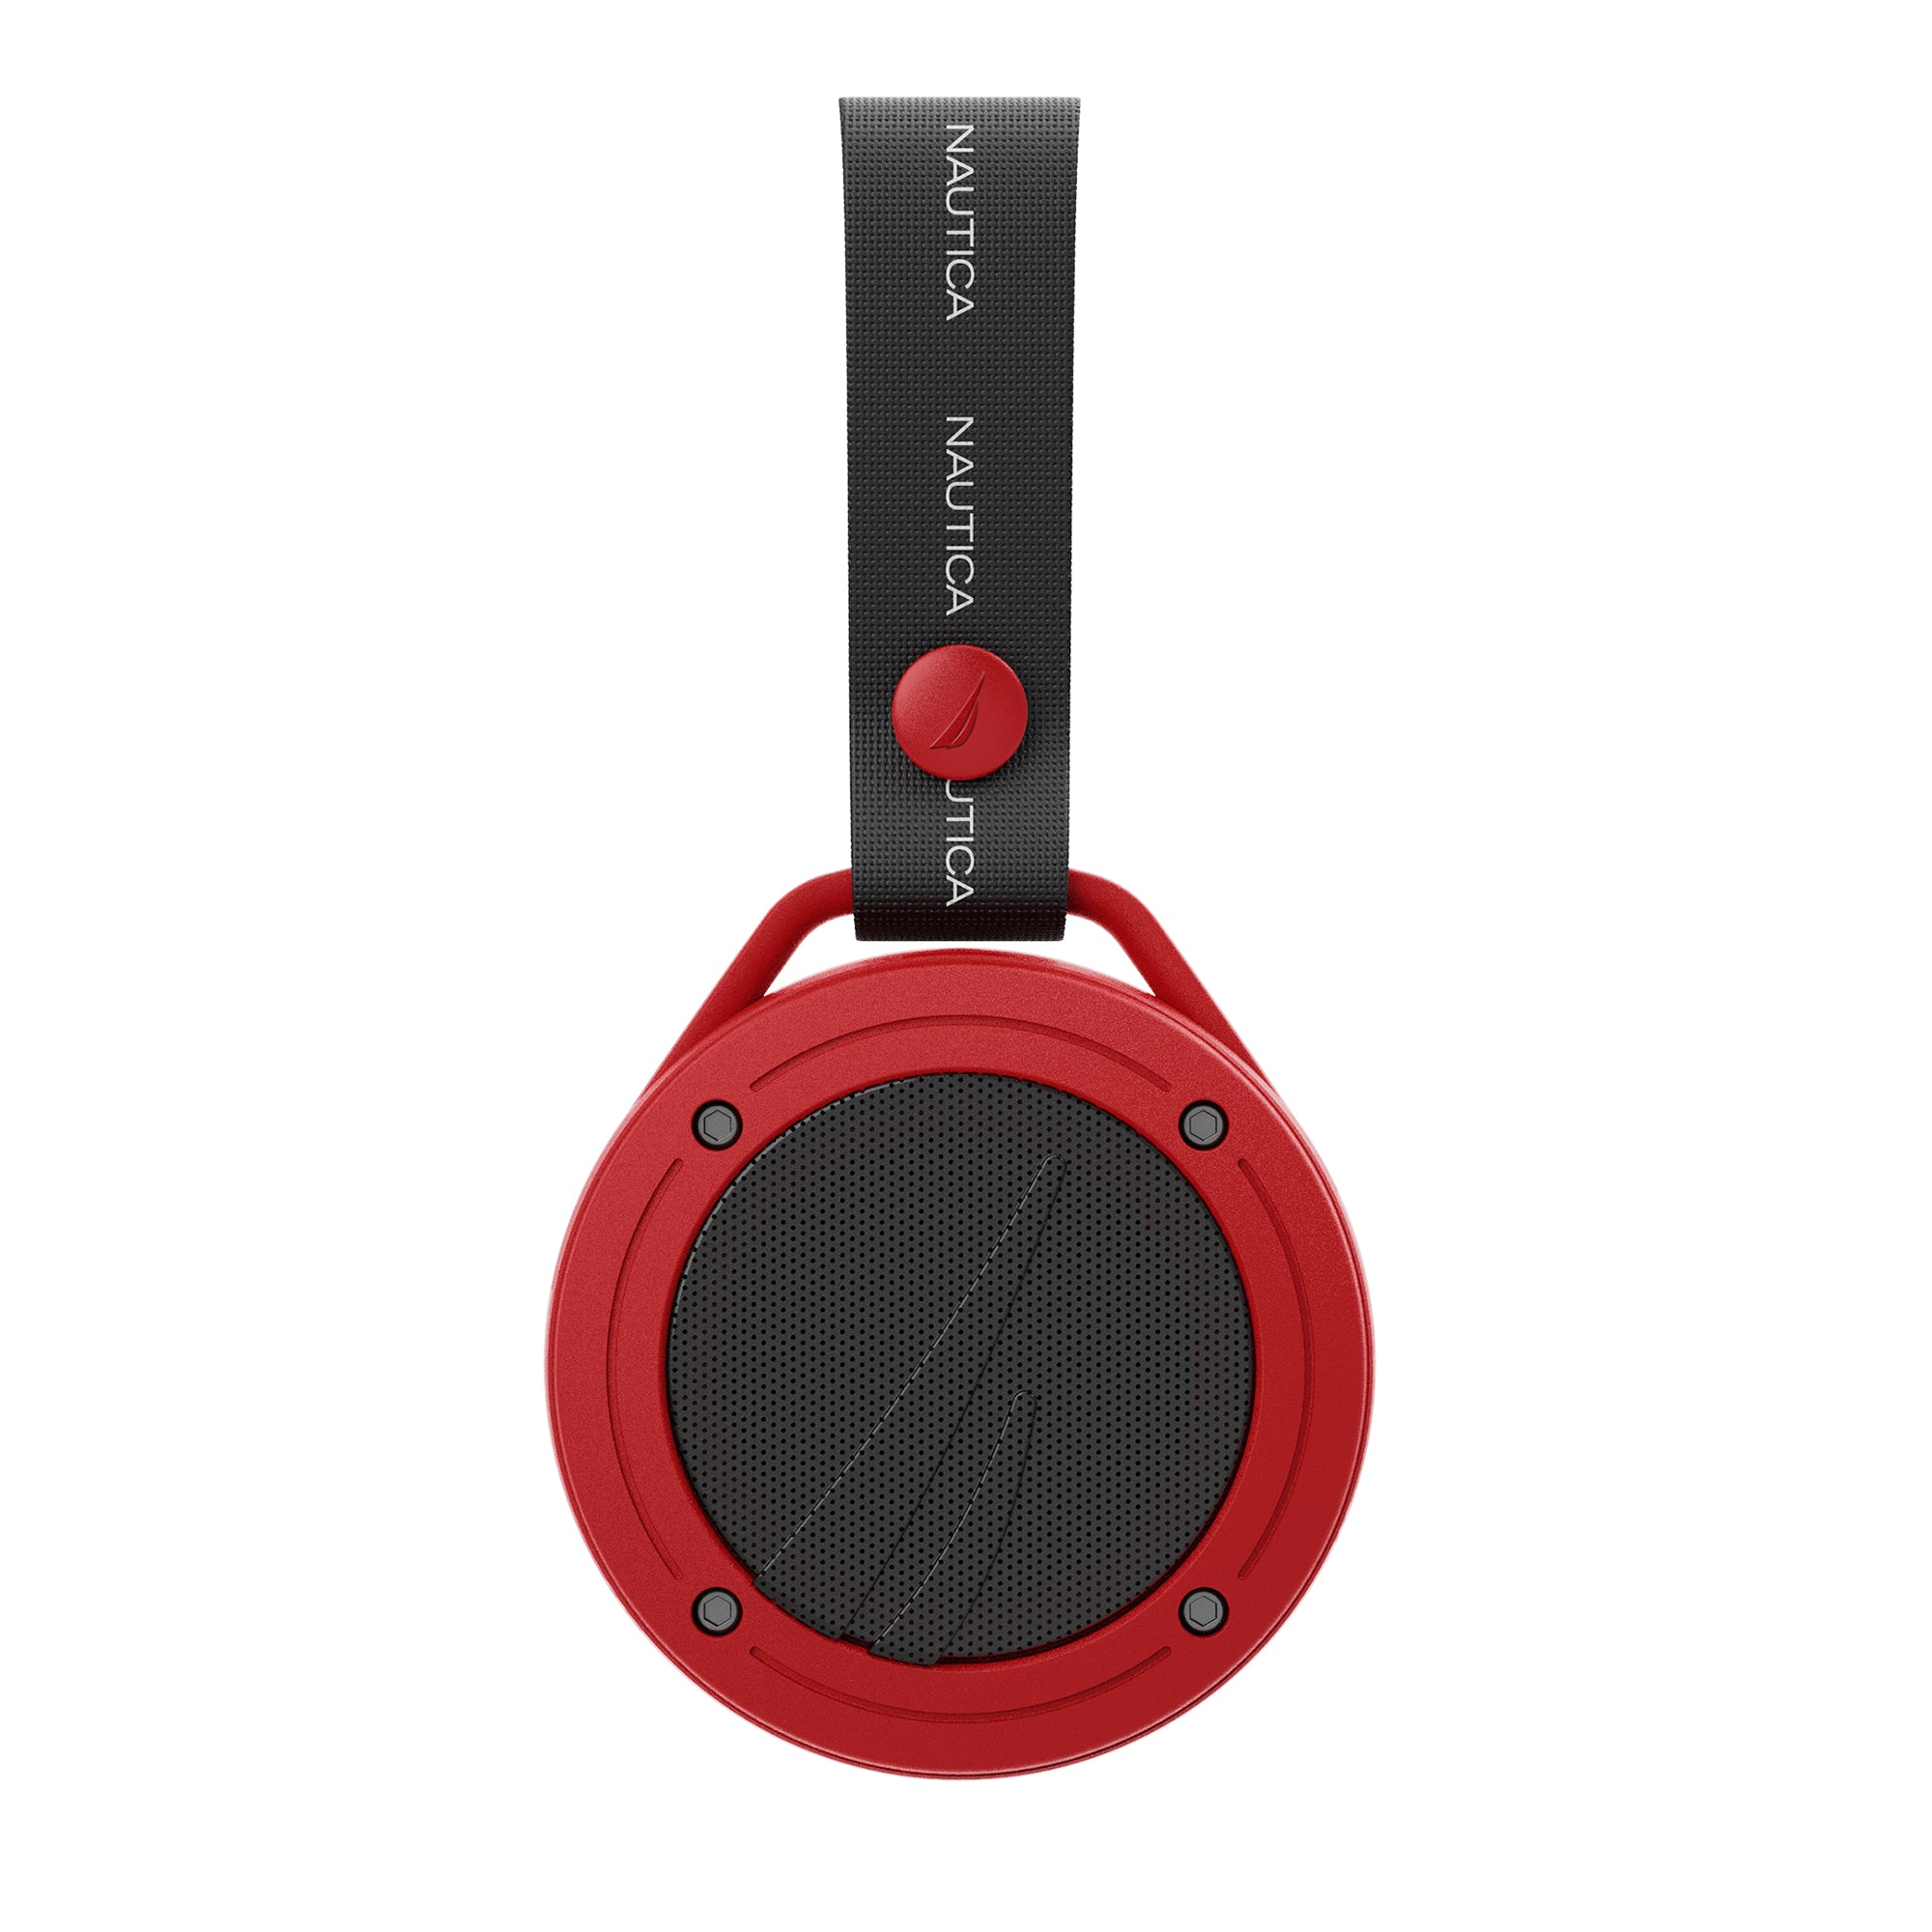 Haut-parleur Bluetooth portable Nautica S20